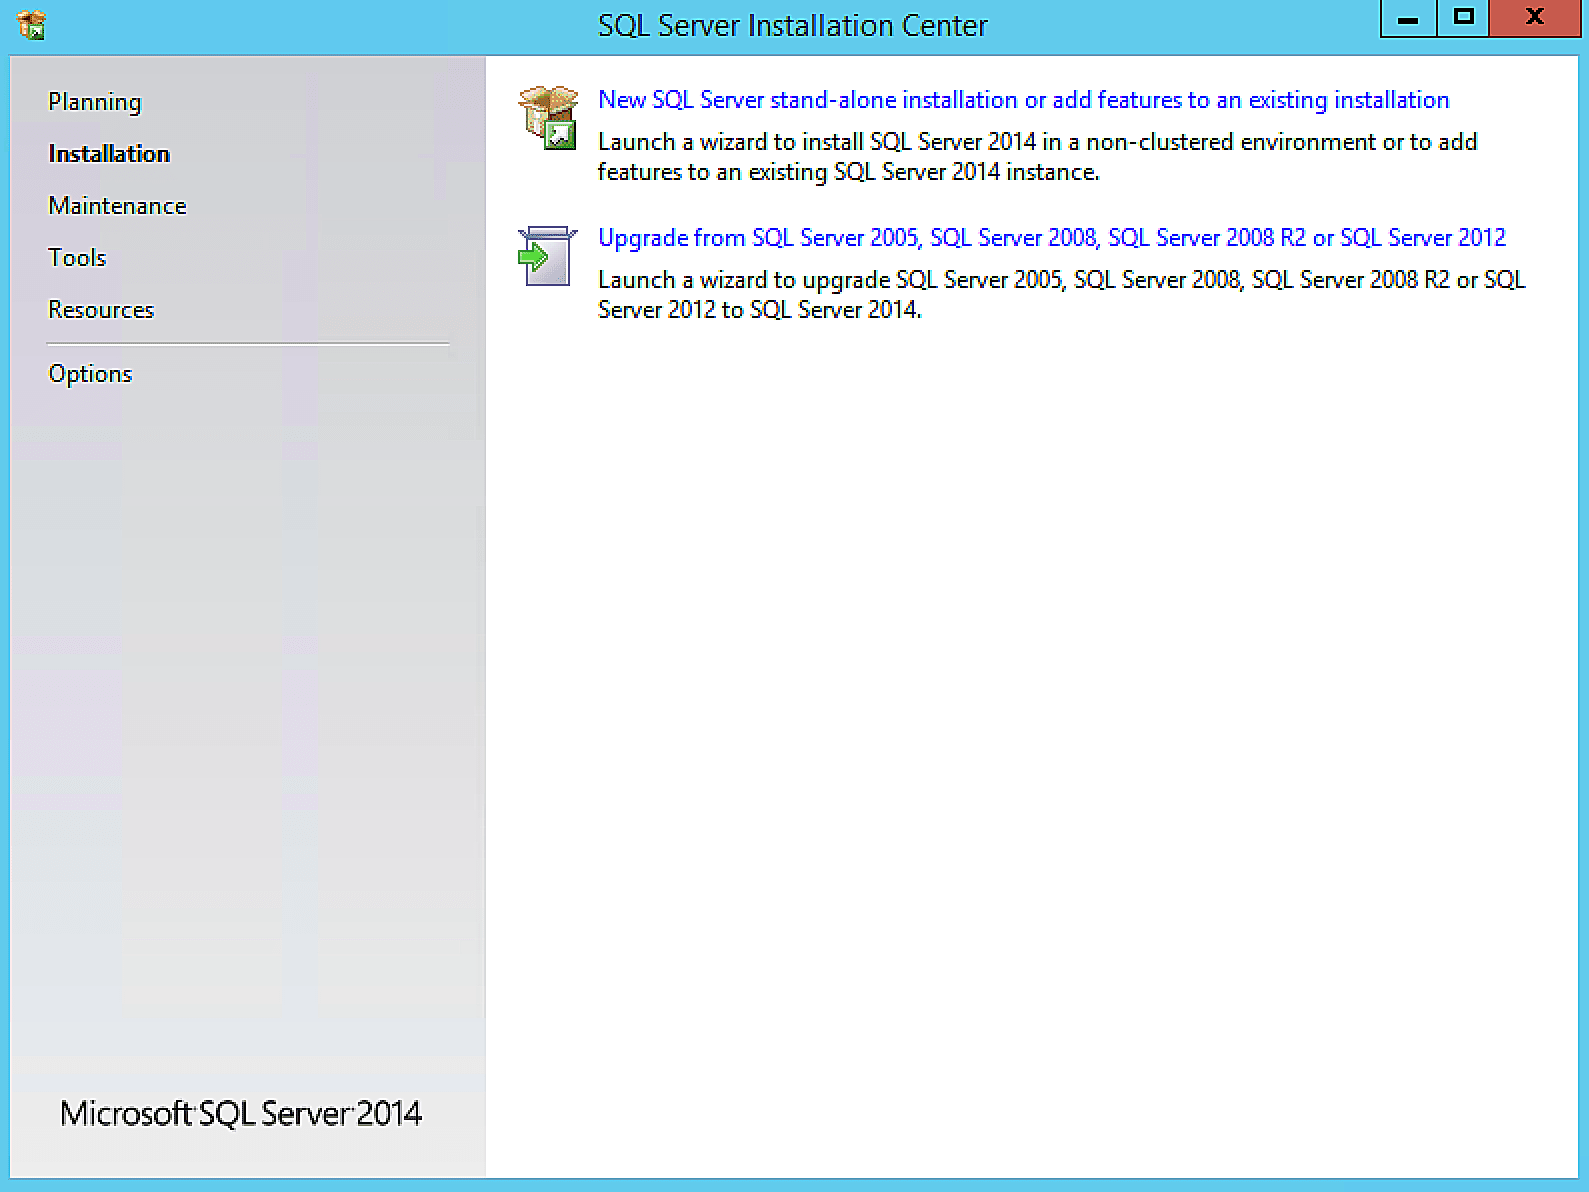 Windows 2008 r2 service pack 2